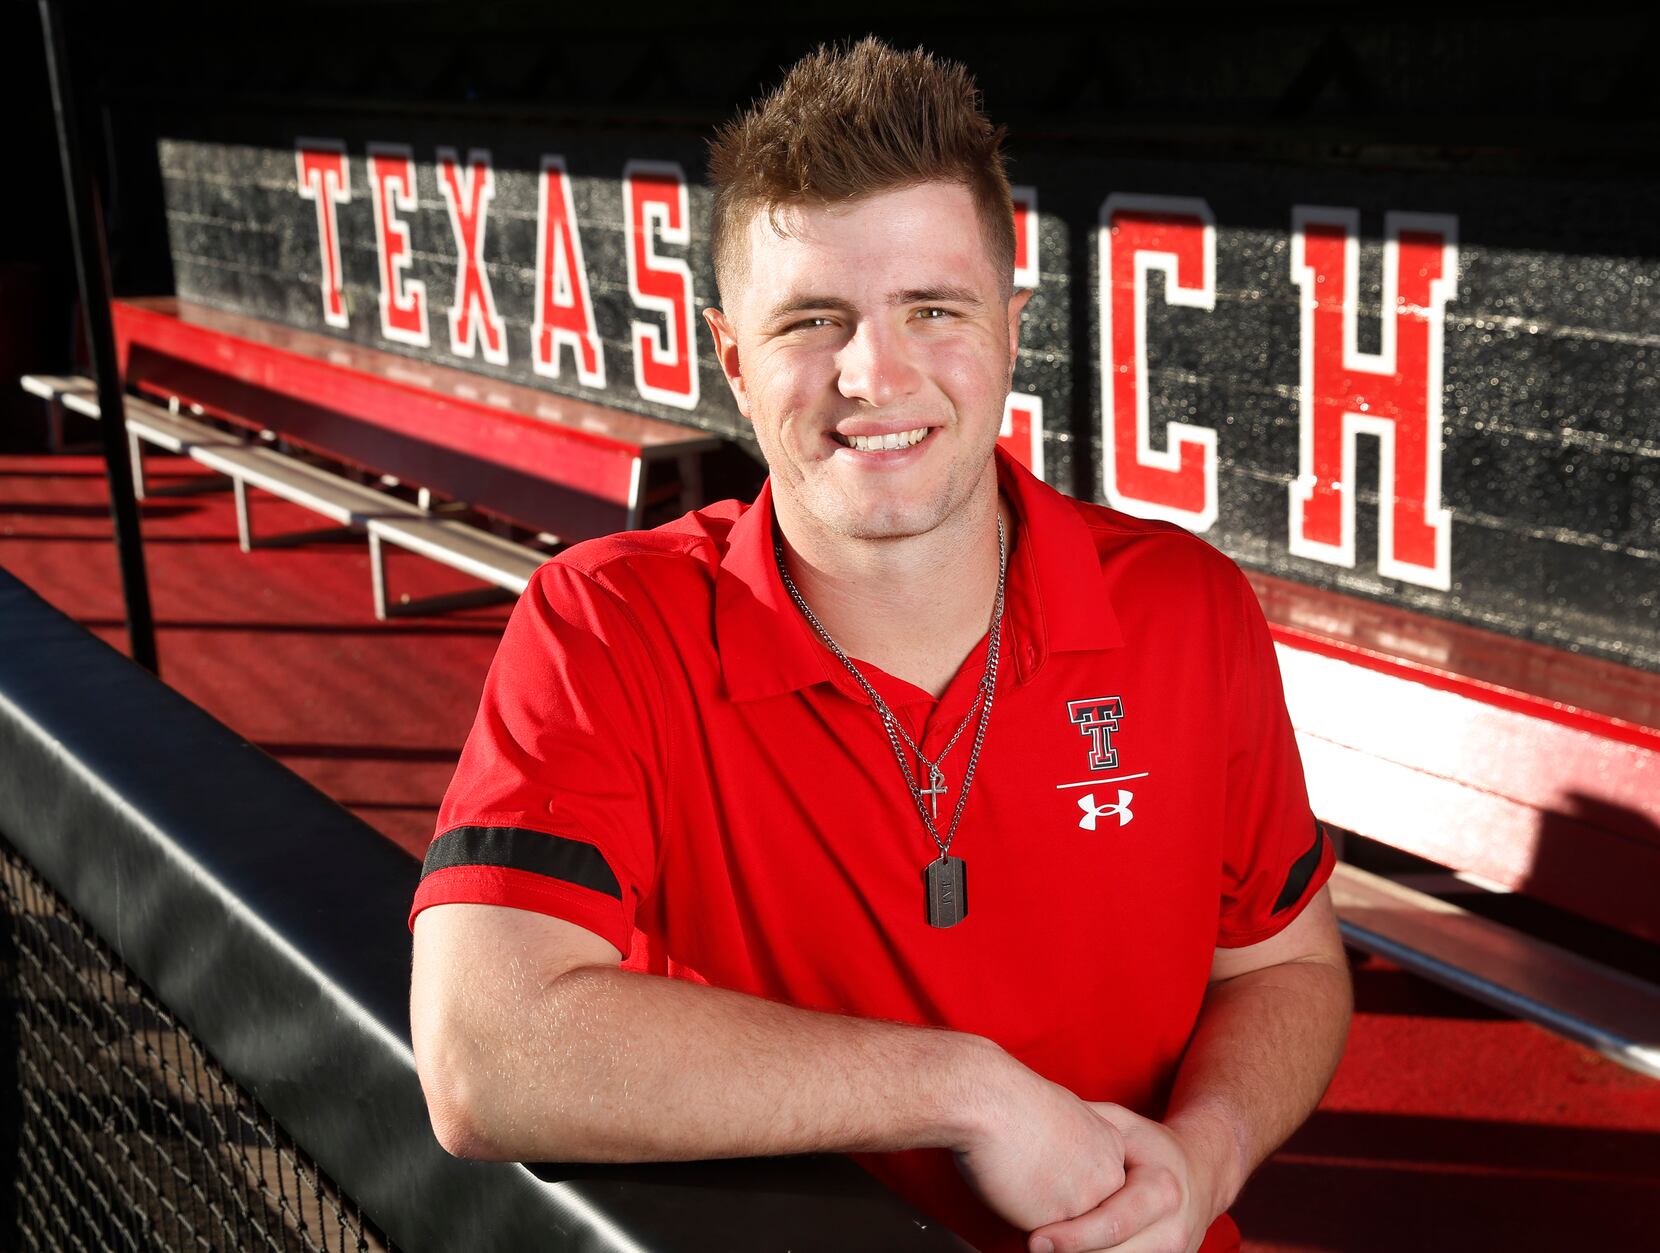 Texas Tech baseball alums: Josh Jung's season in jeopardy after